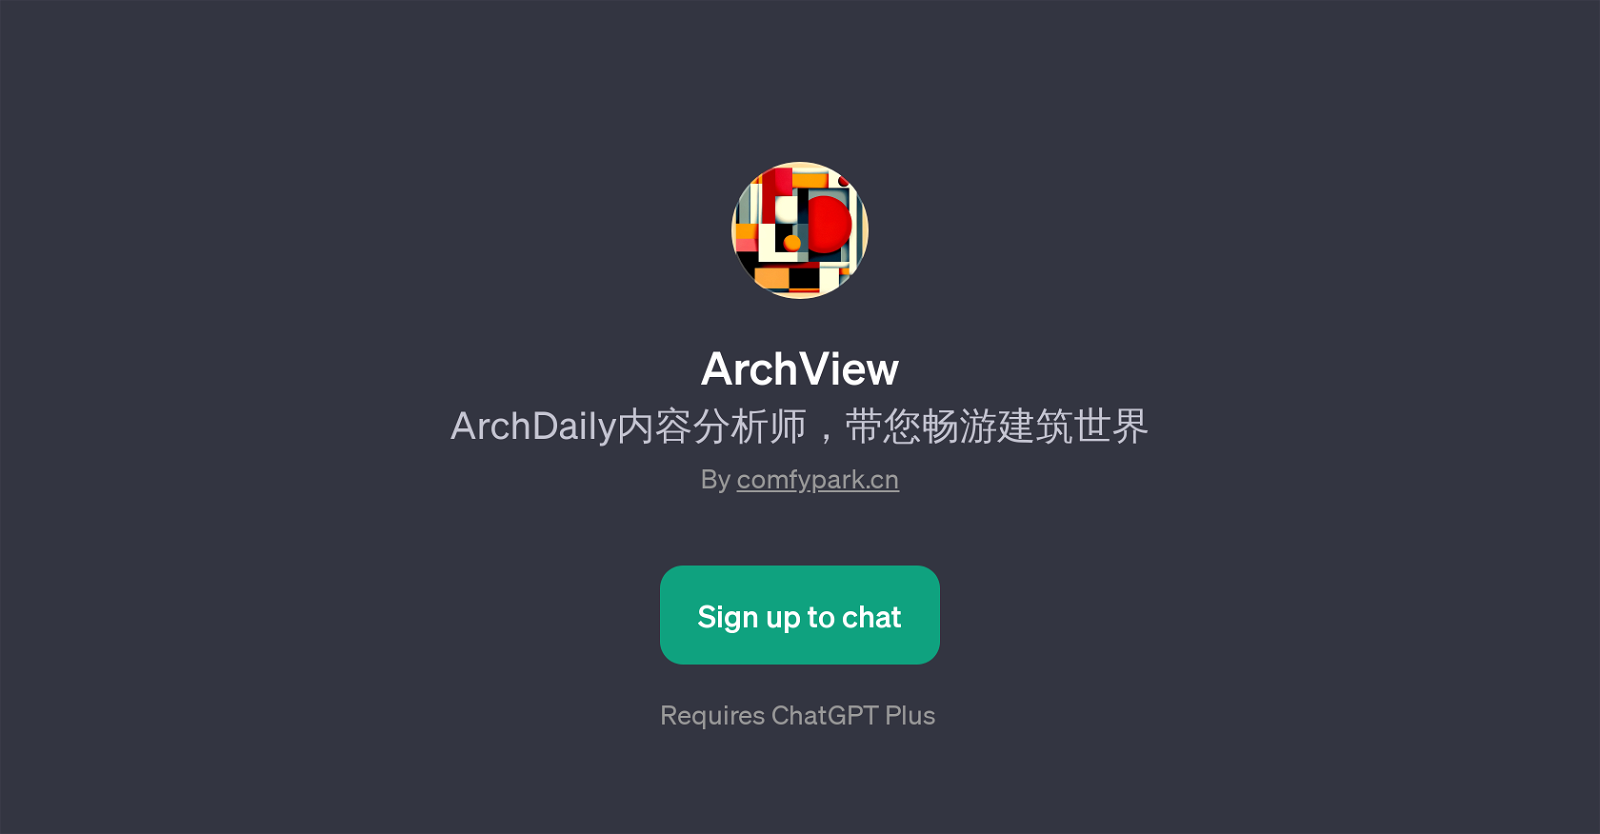 ArchView website